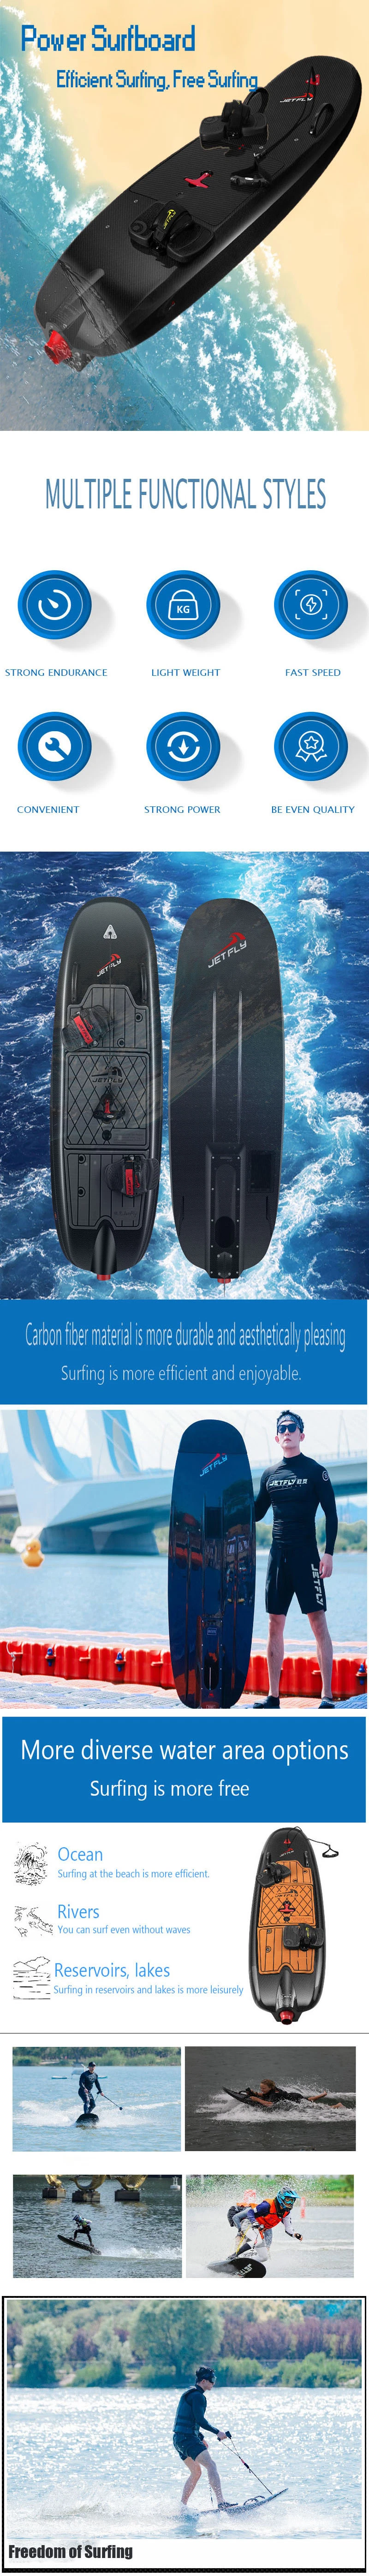 Jetfly03 Electric Digital Wholesale Carbon Fiber Jet Surfboard Speed Water Ski Kite Surf Board Water Surfboard for Surfing